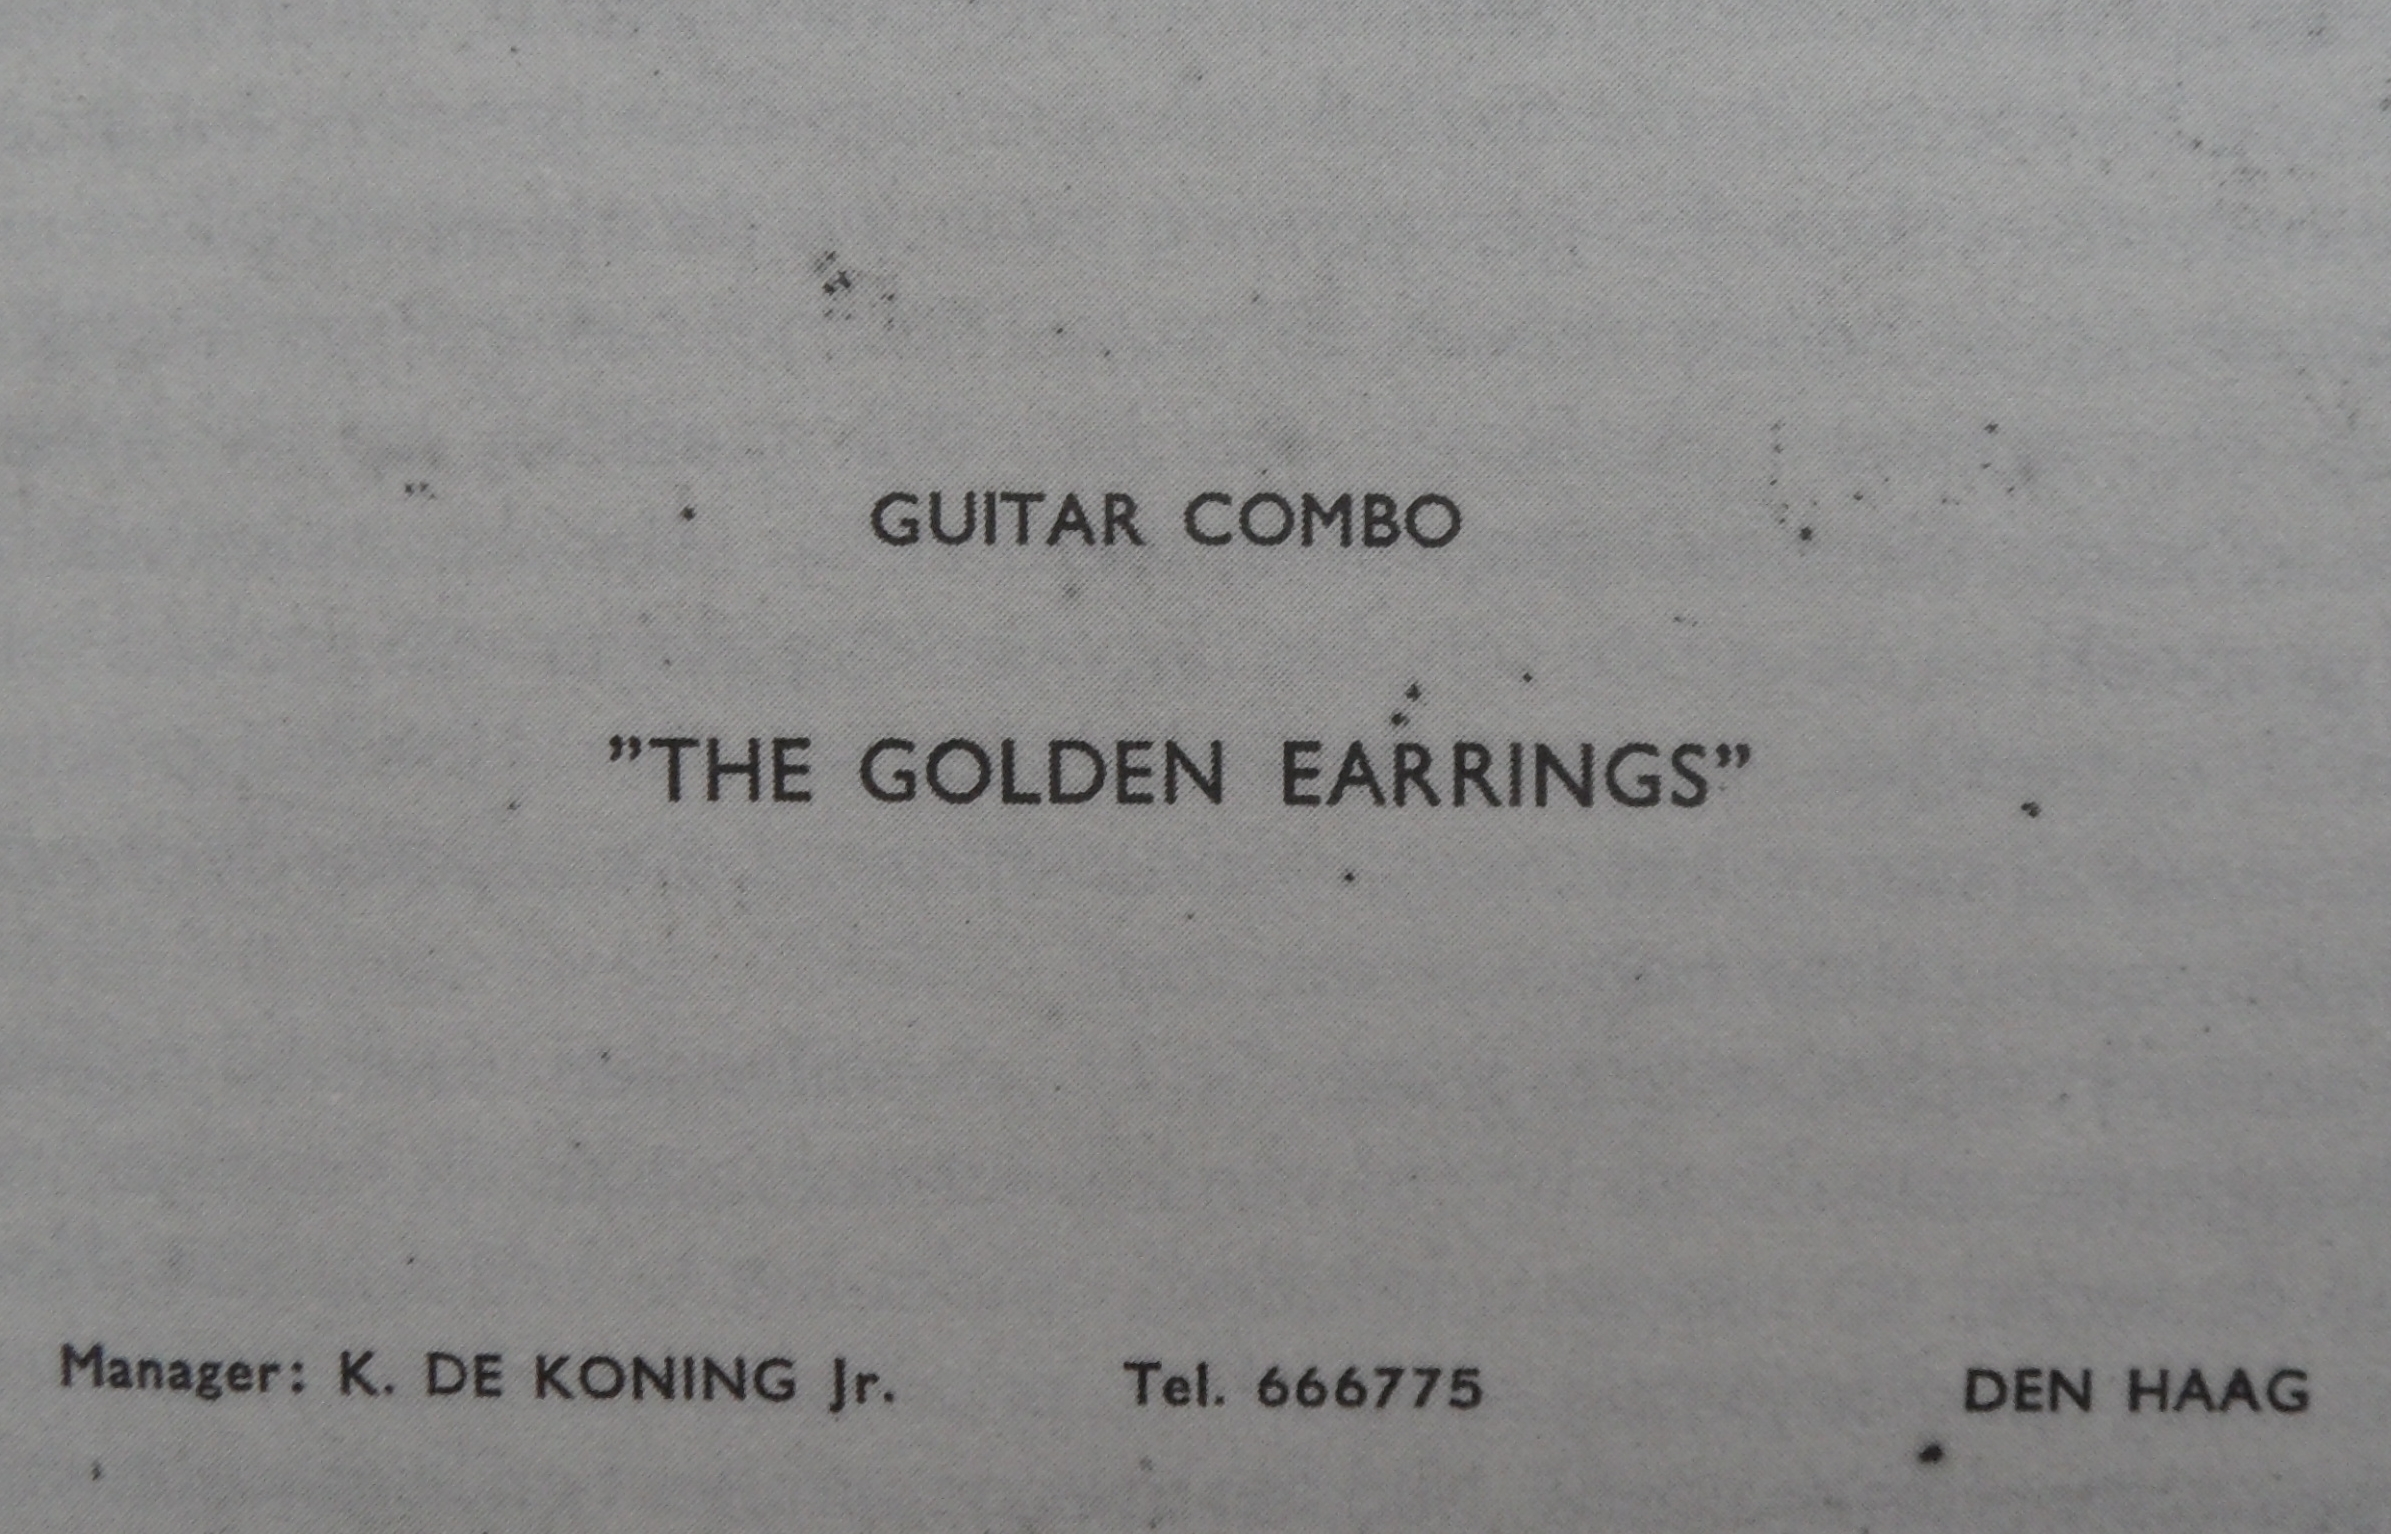 The Golden Ear-rings card